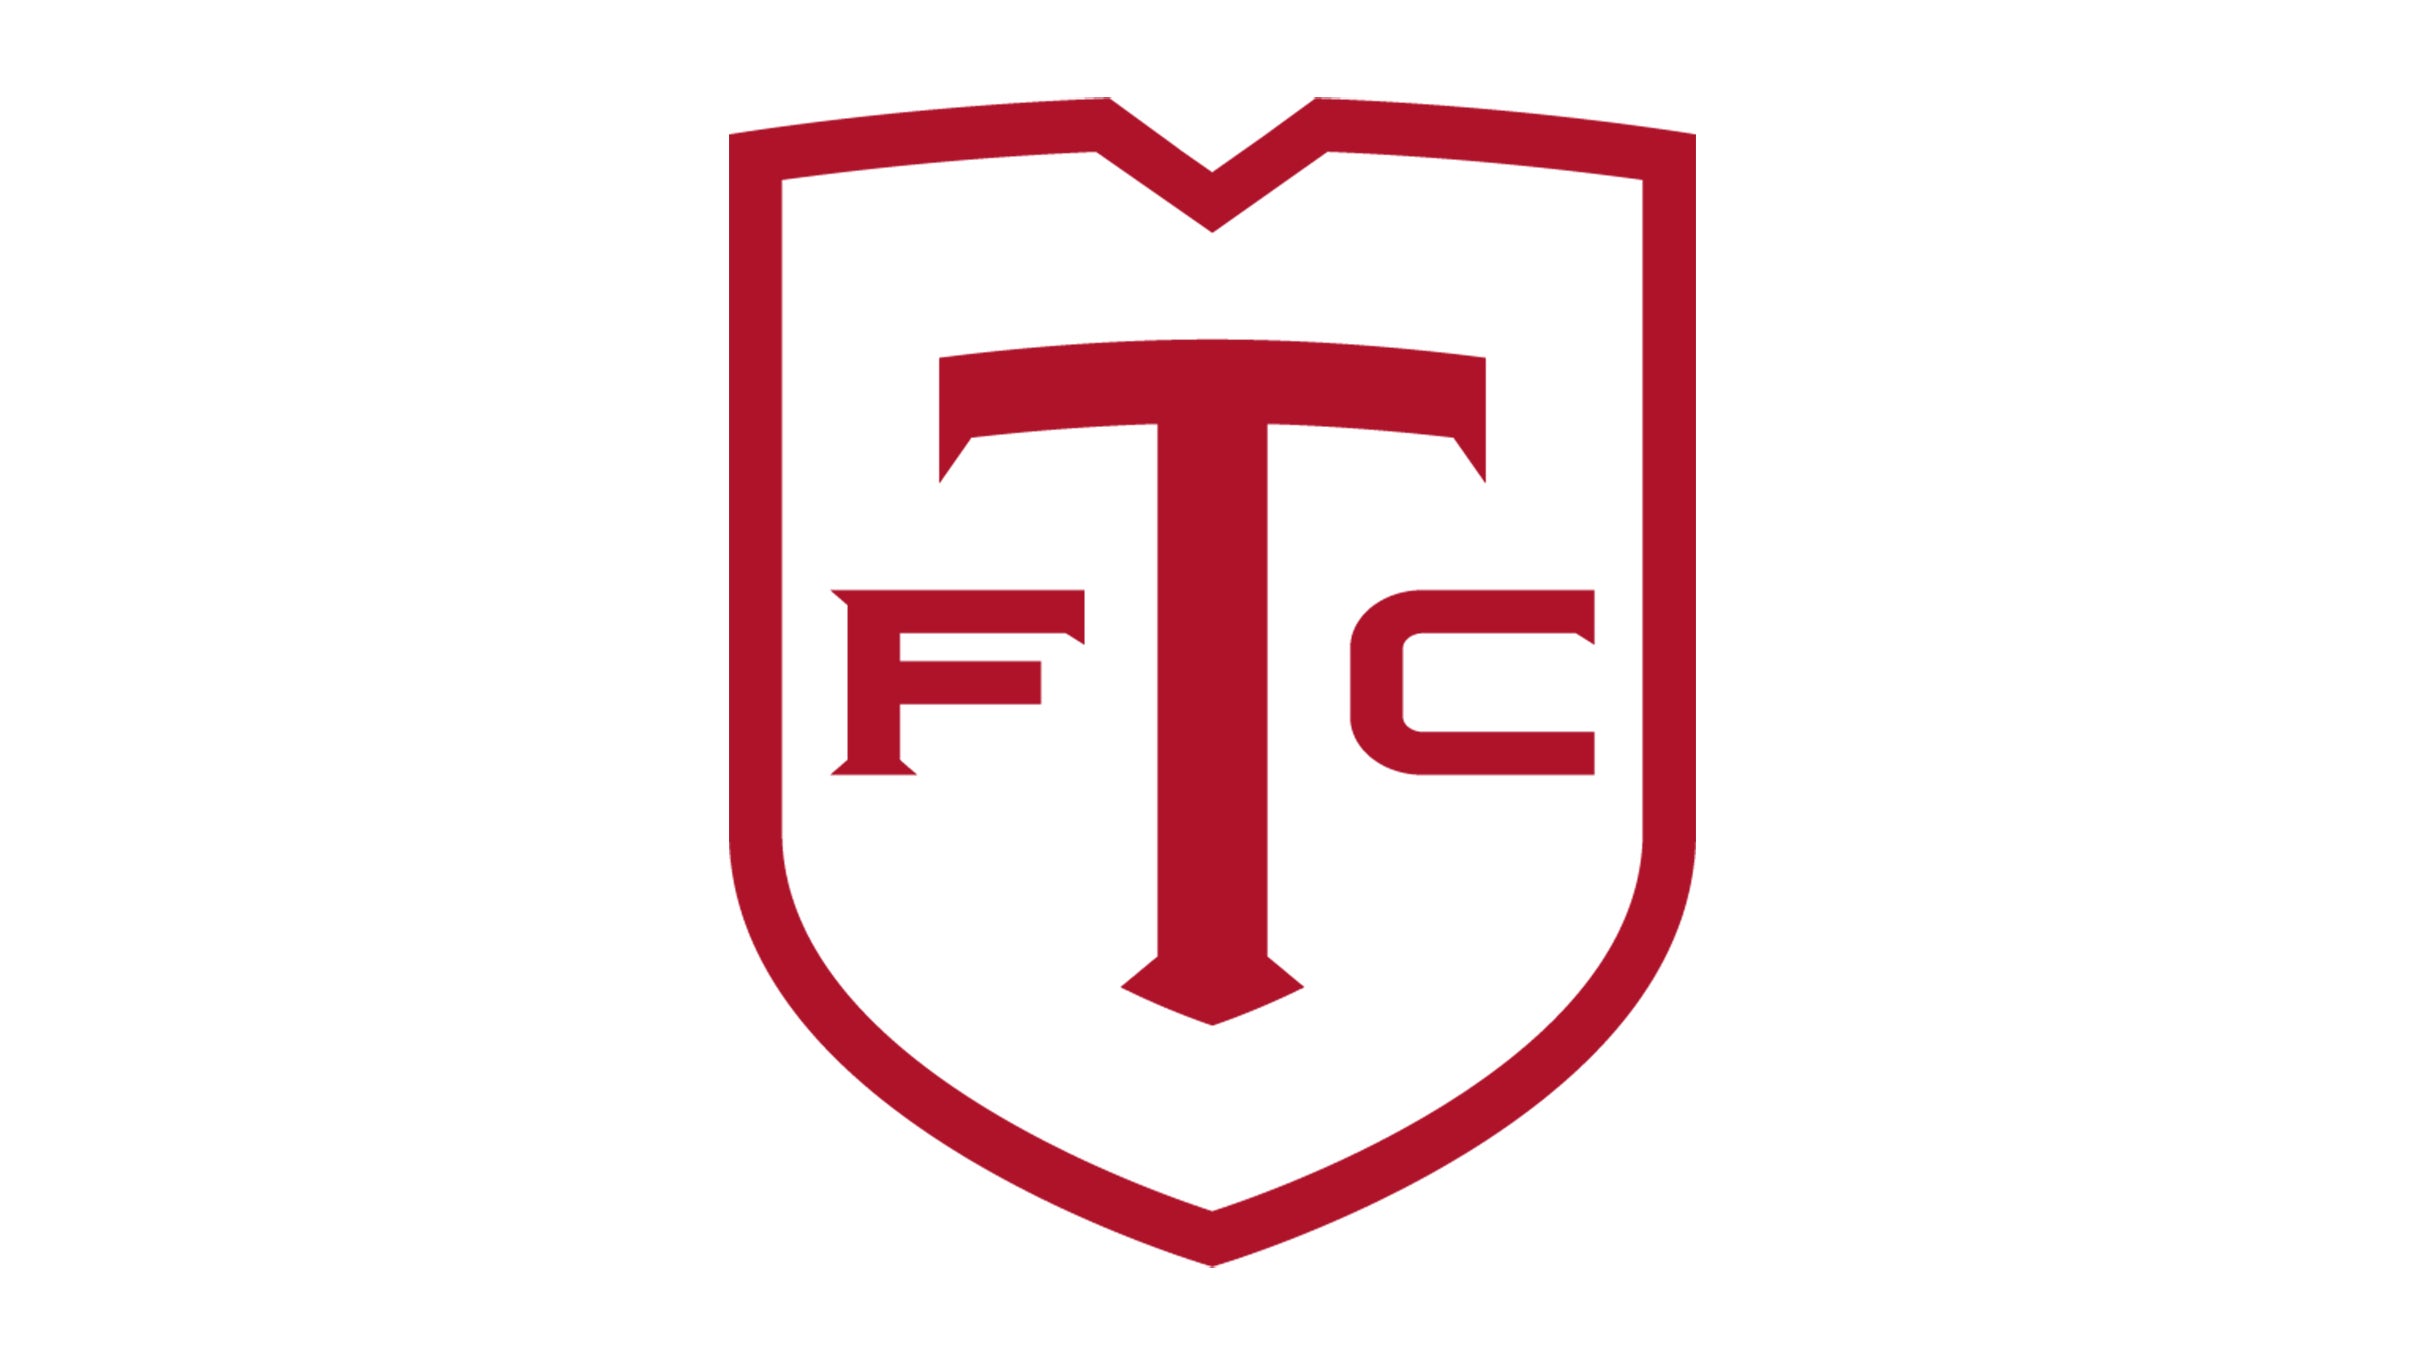 Toronto FC vs CF Montreal presale passwords